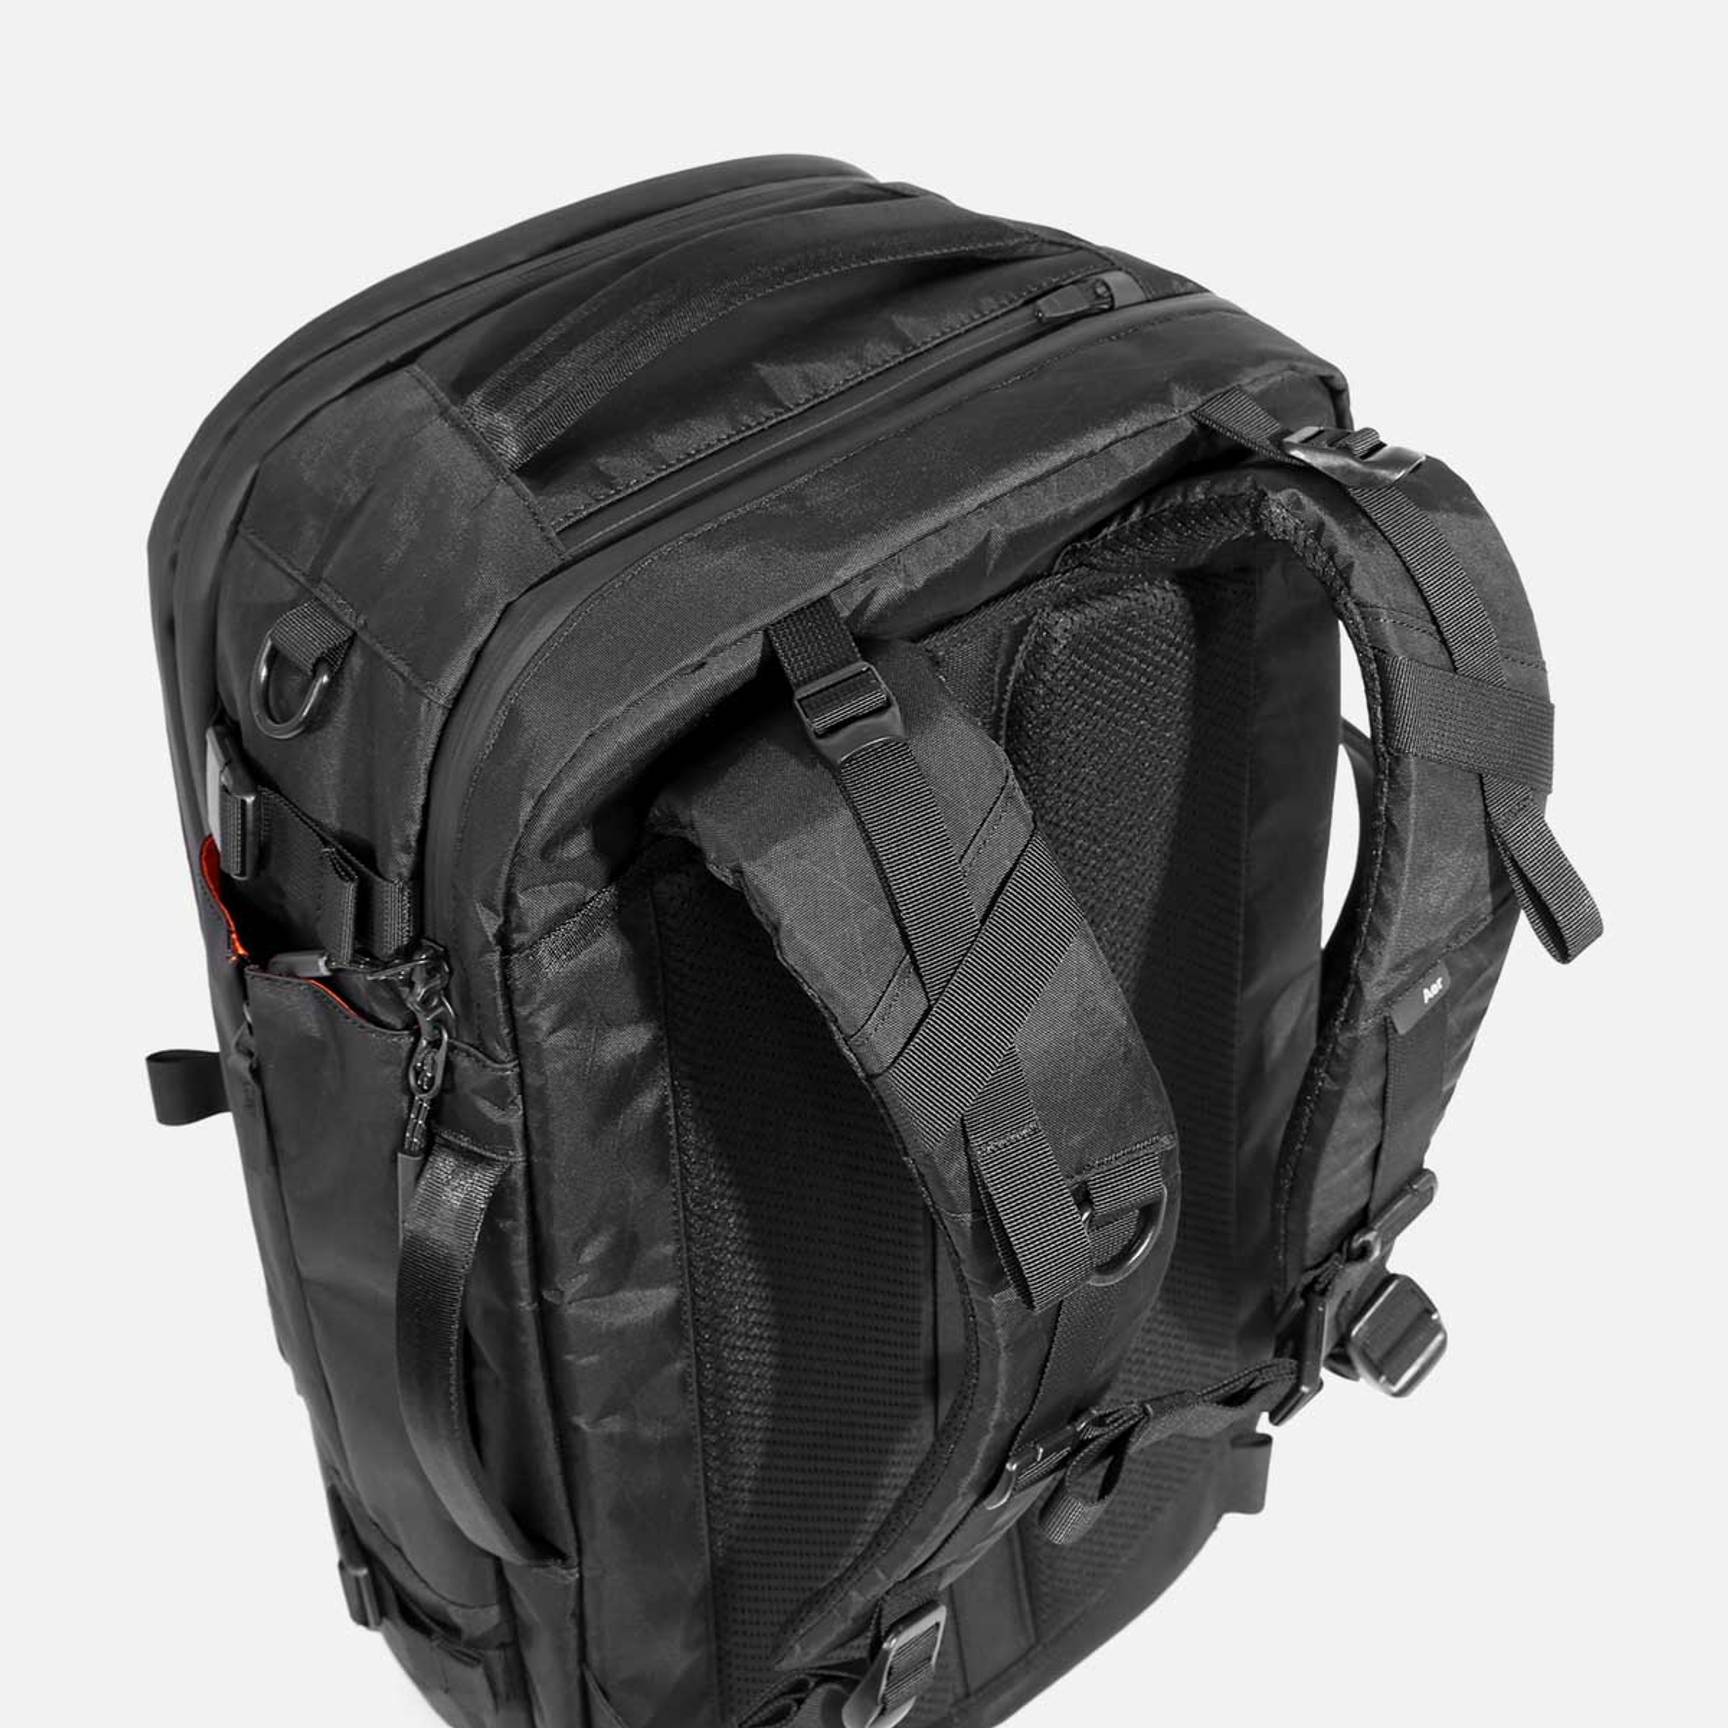 Sac voyage Eastpak Compact + 008 Black – Lucky Bag™